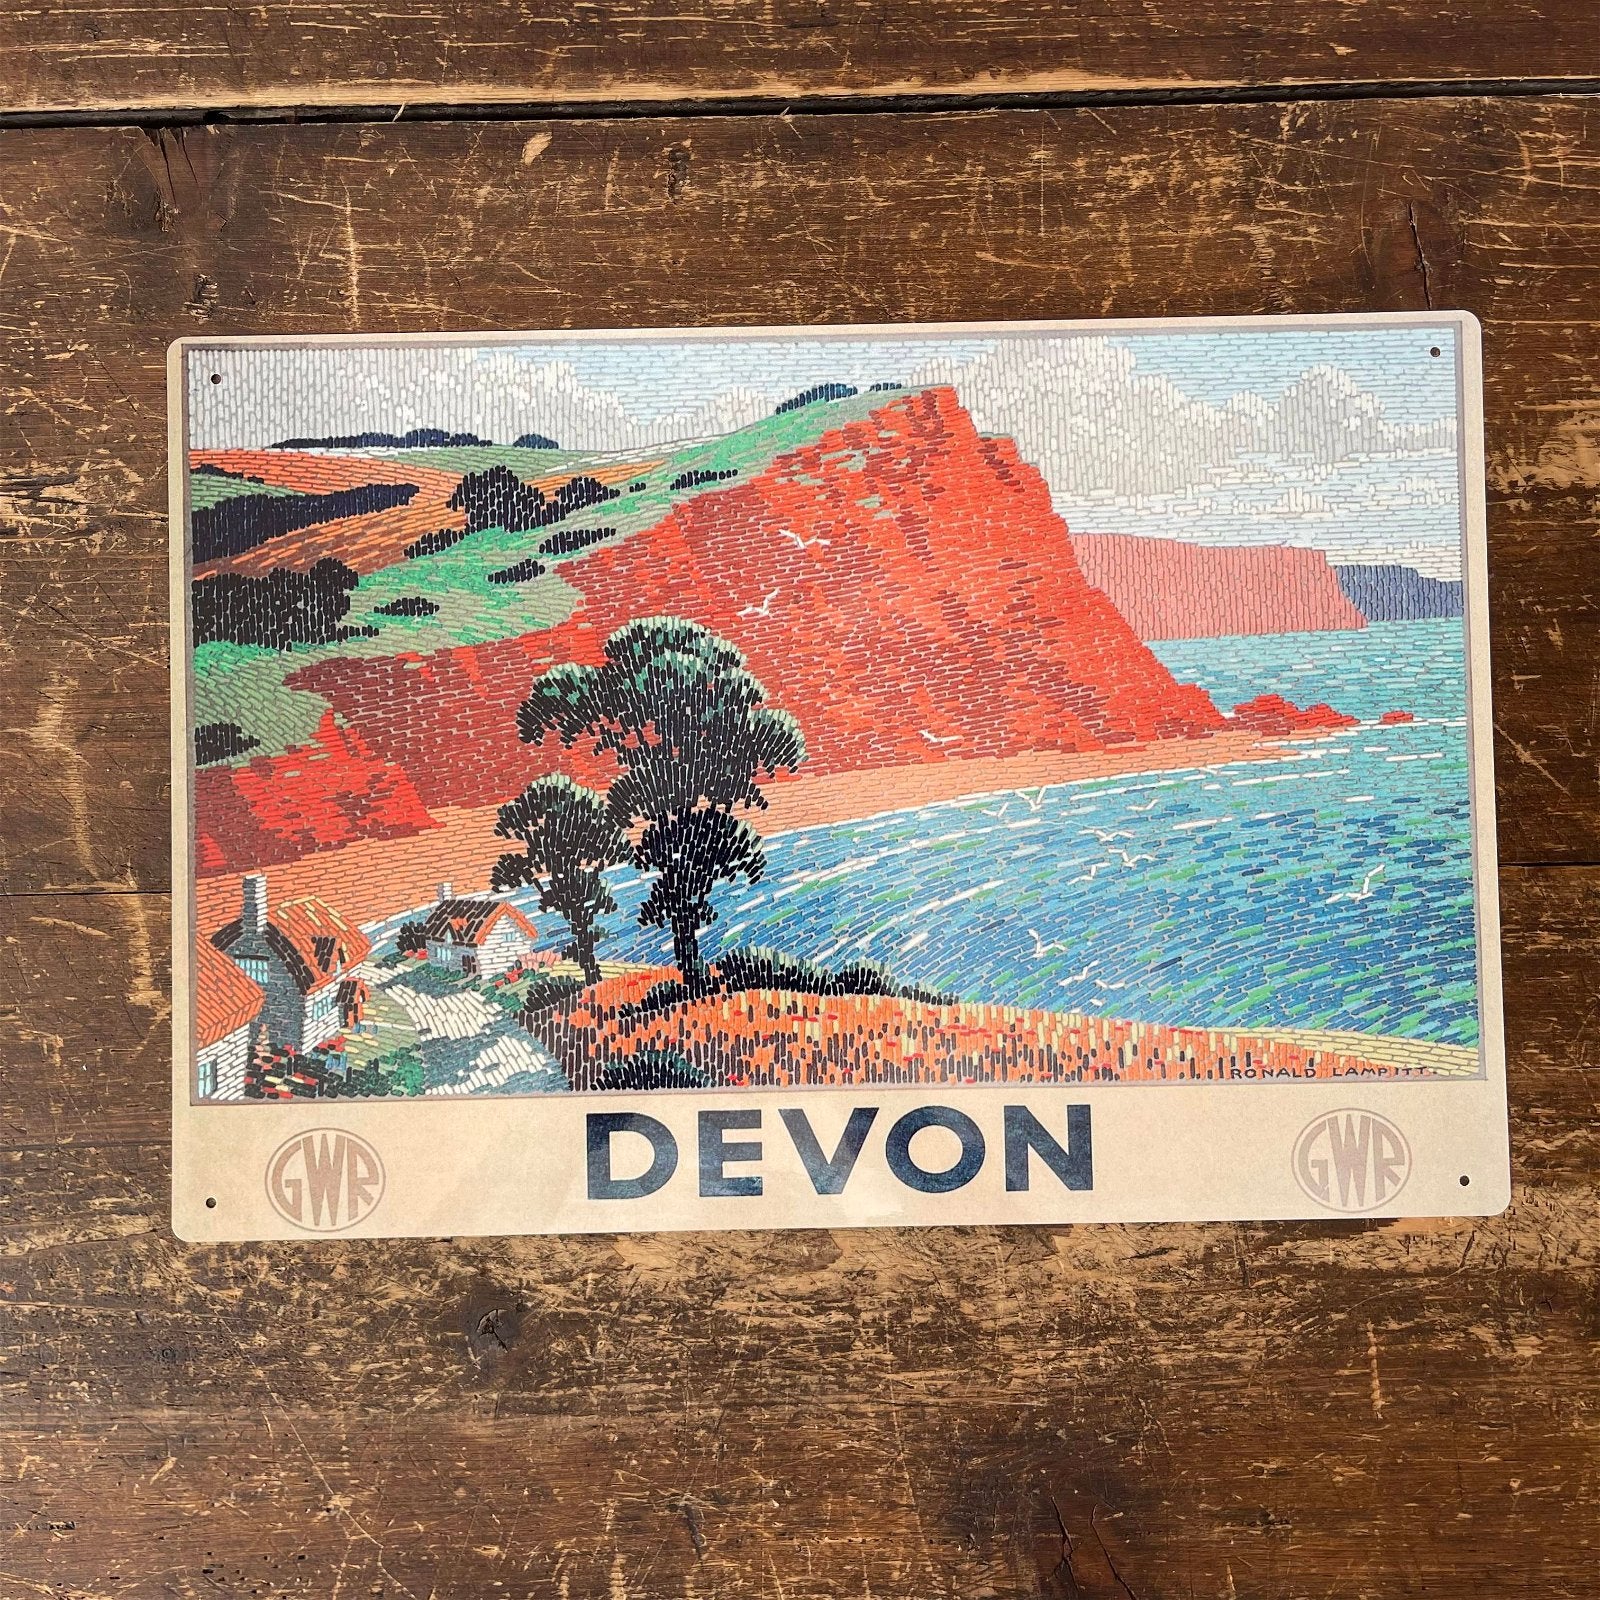 Vintage Metal Sign - Great Western Railway, Devon